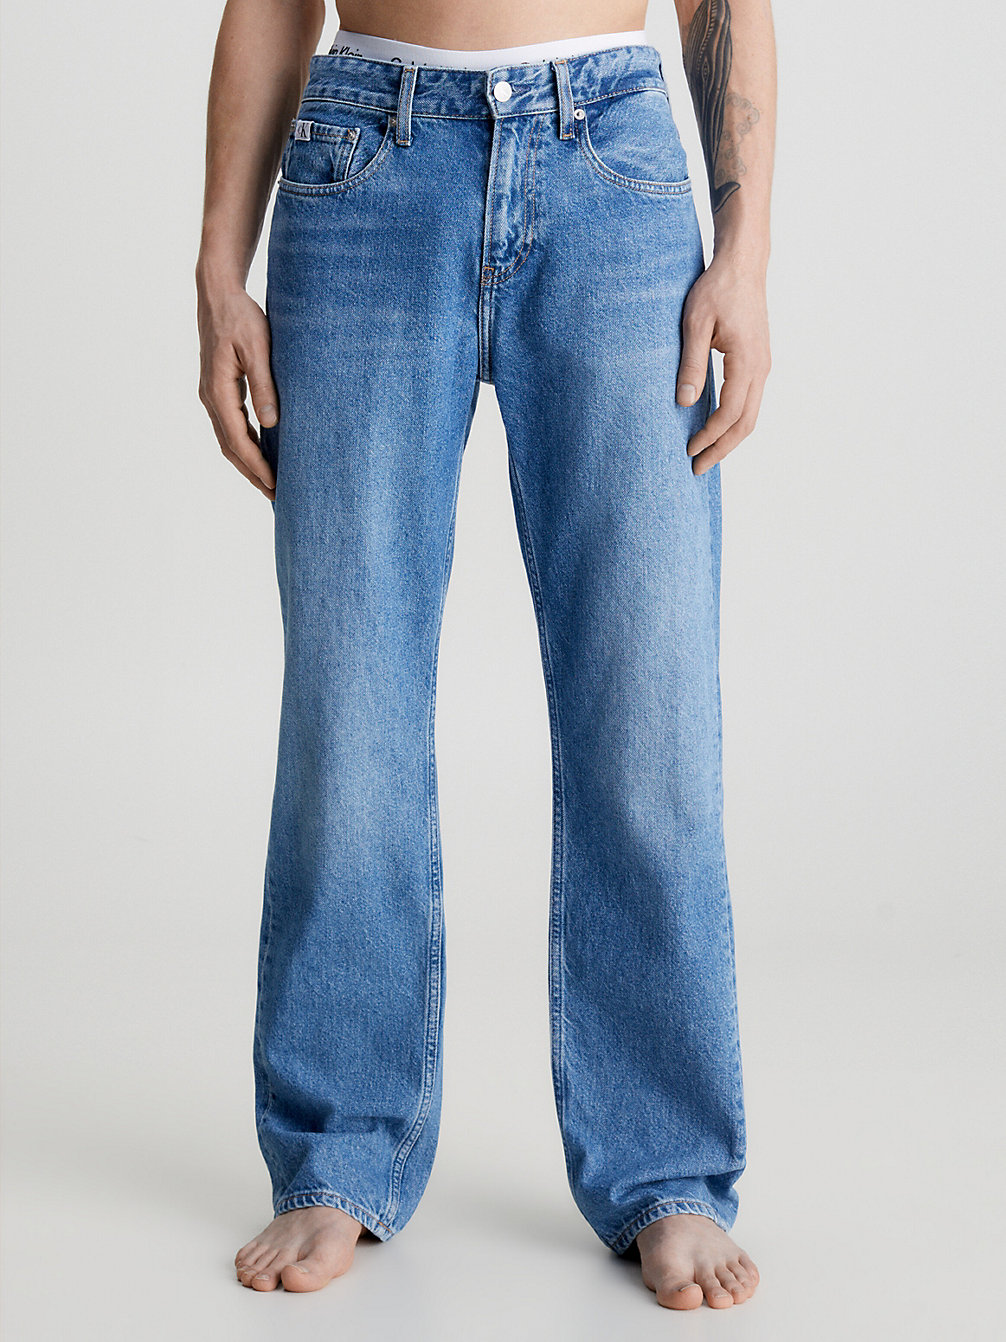 Men's Jeans Skinny, Slim-fit, Ripped & More | Klein®